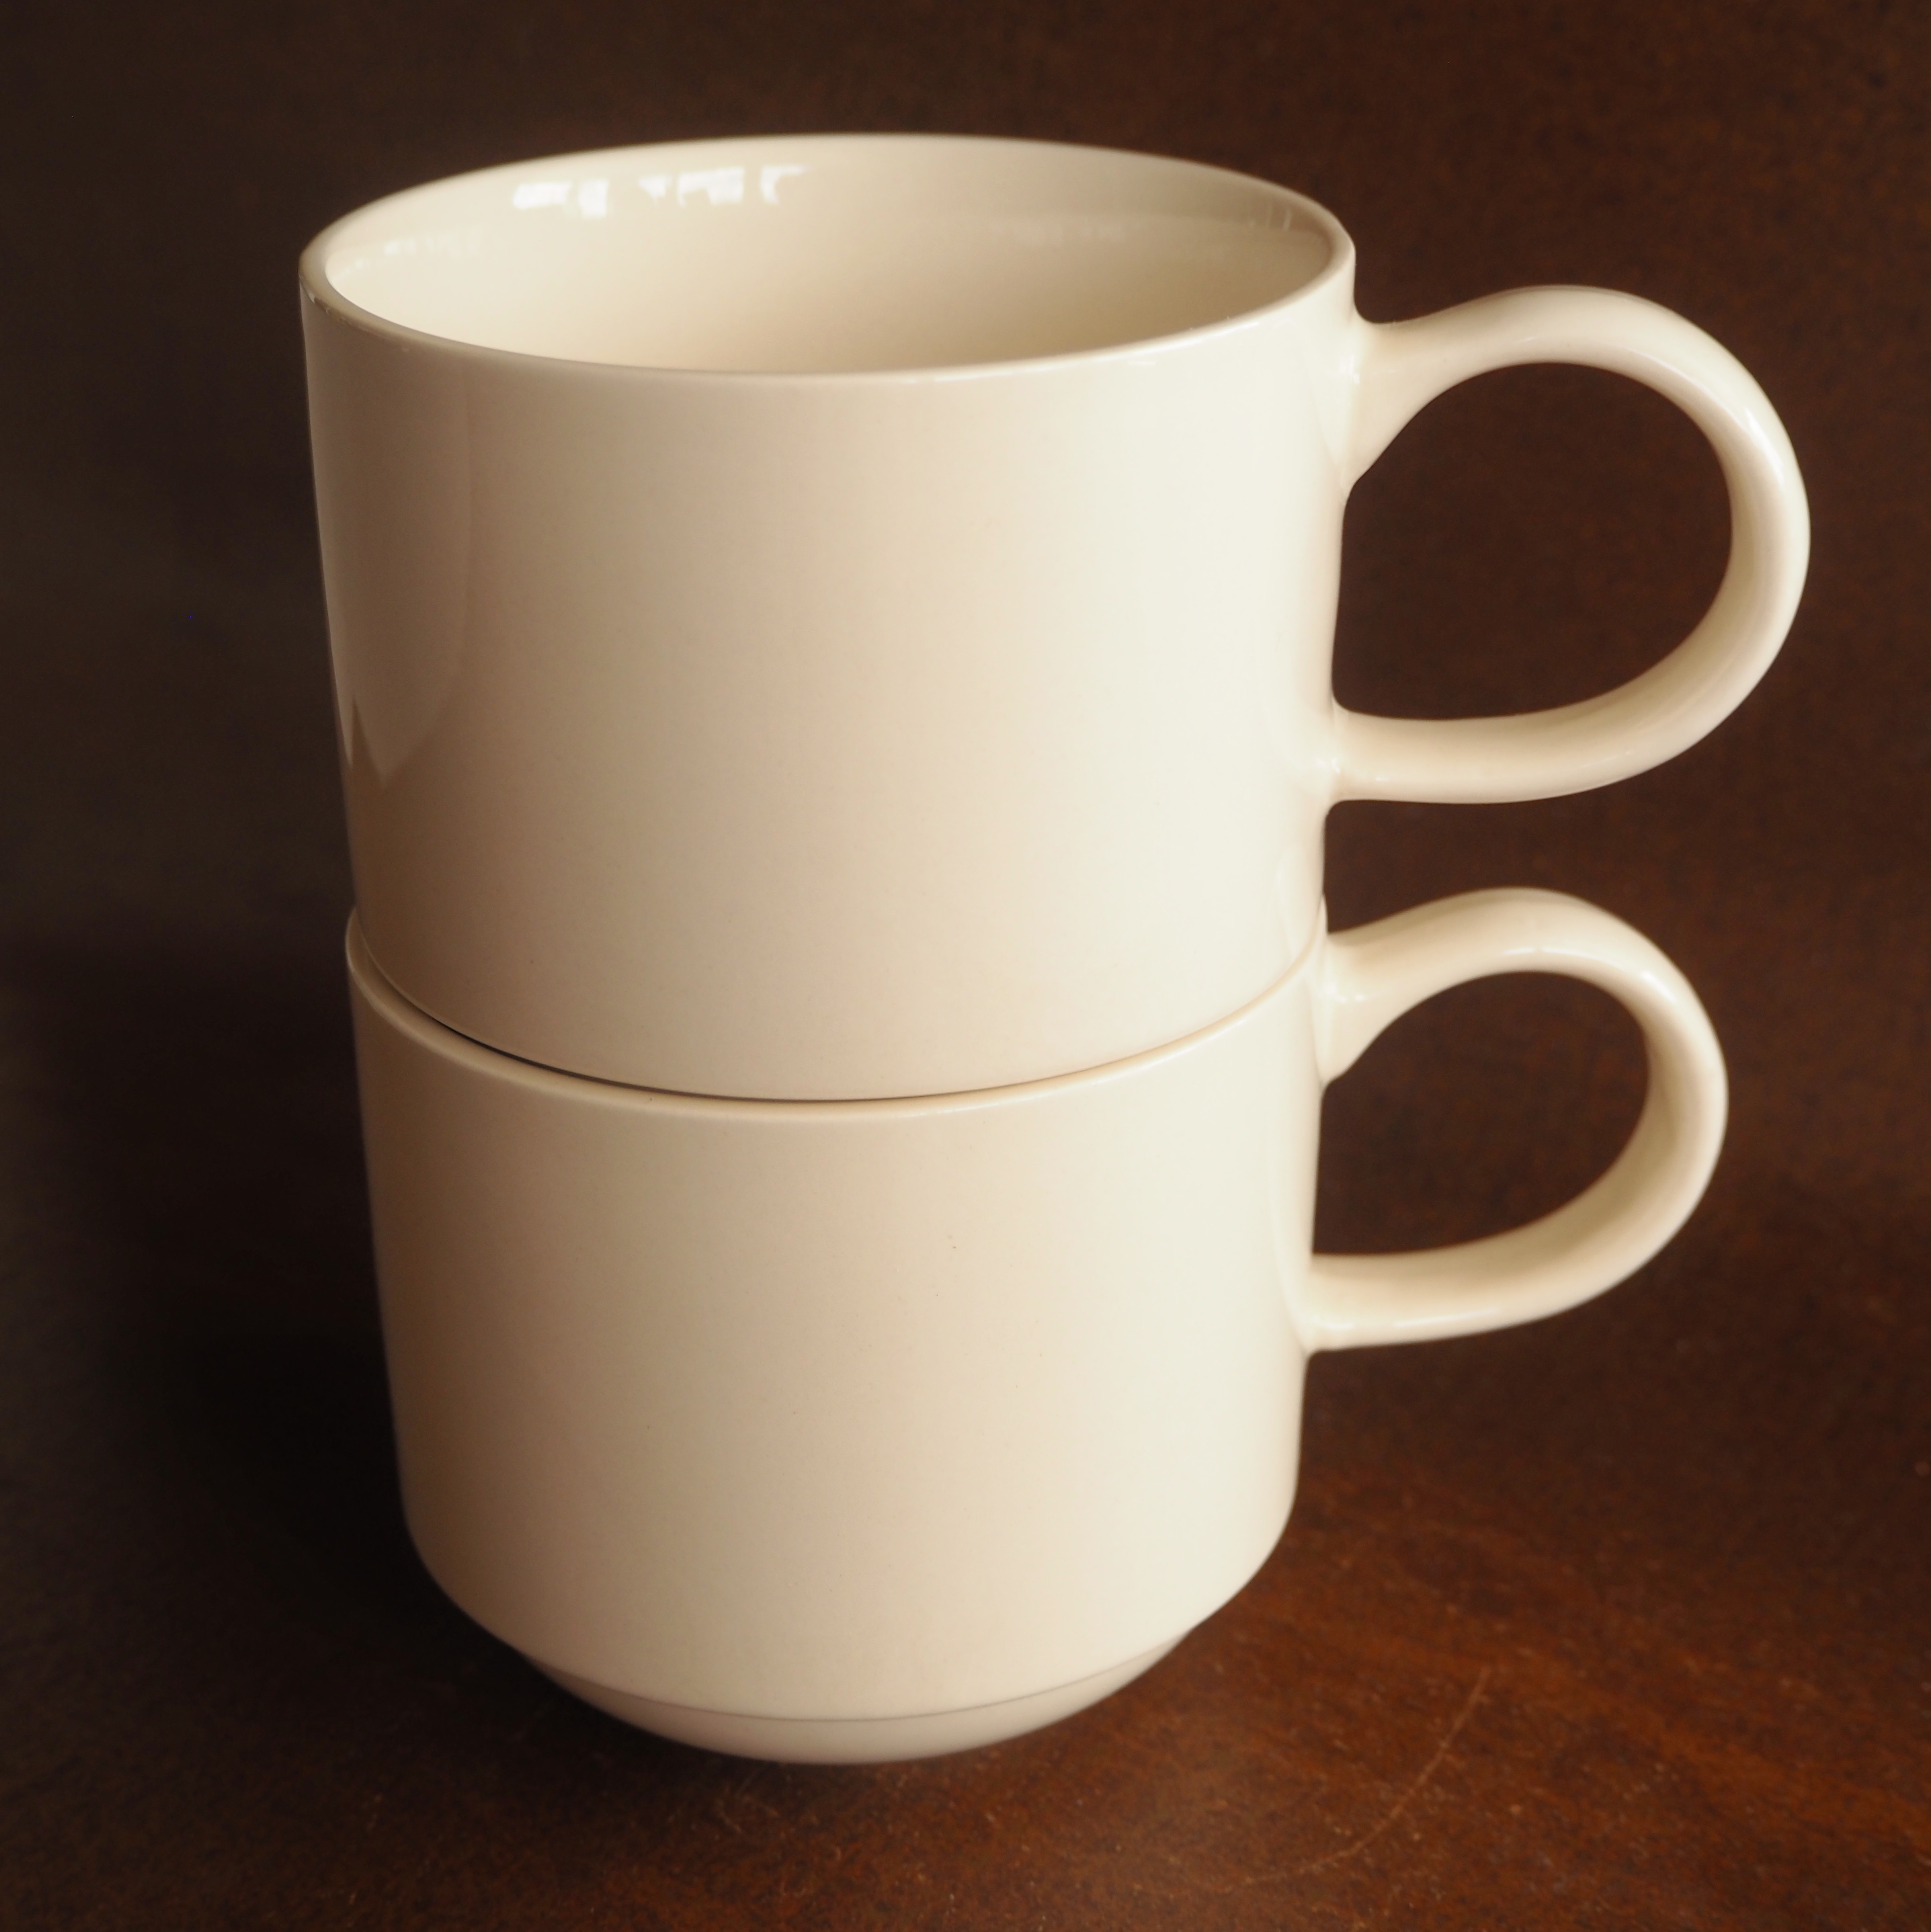 Stackable mug 'Loop' by Anouk Jansen for Jansen+Co